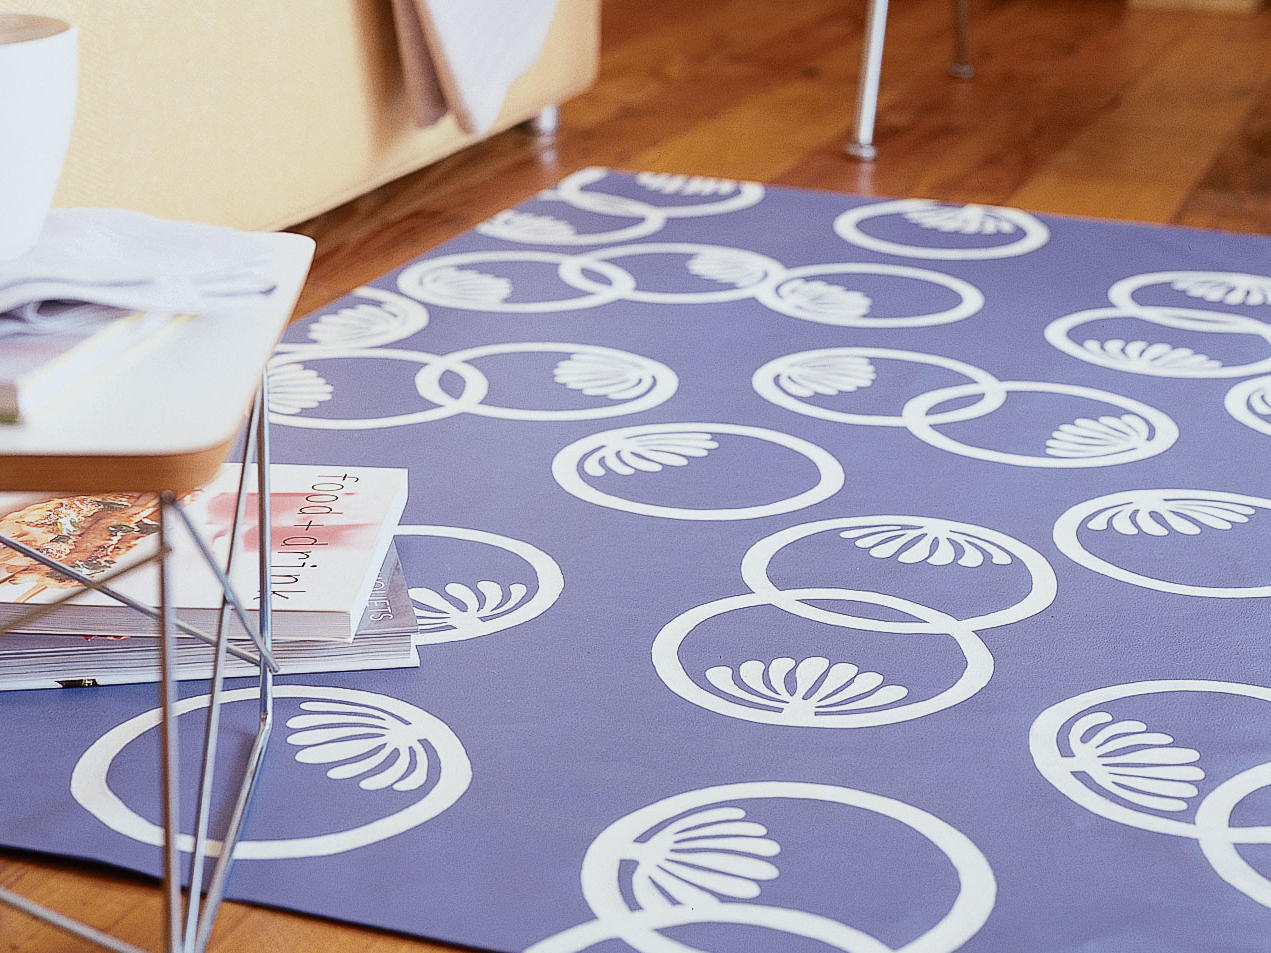 How to Paint a Floor Mat